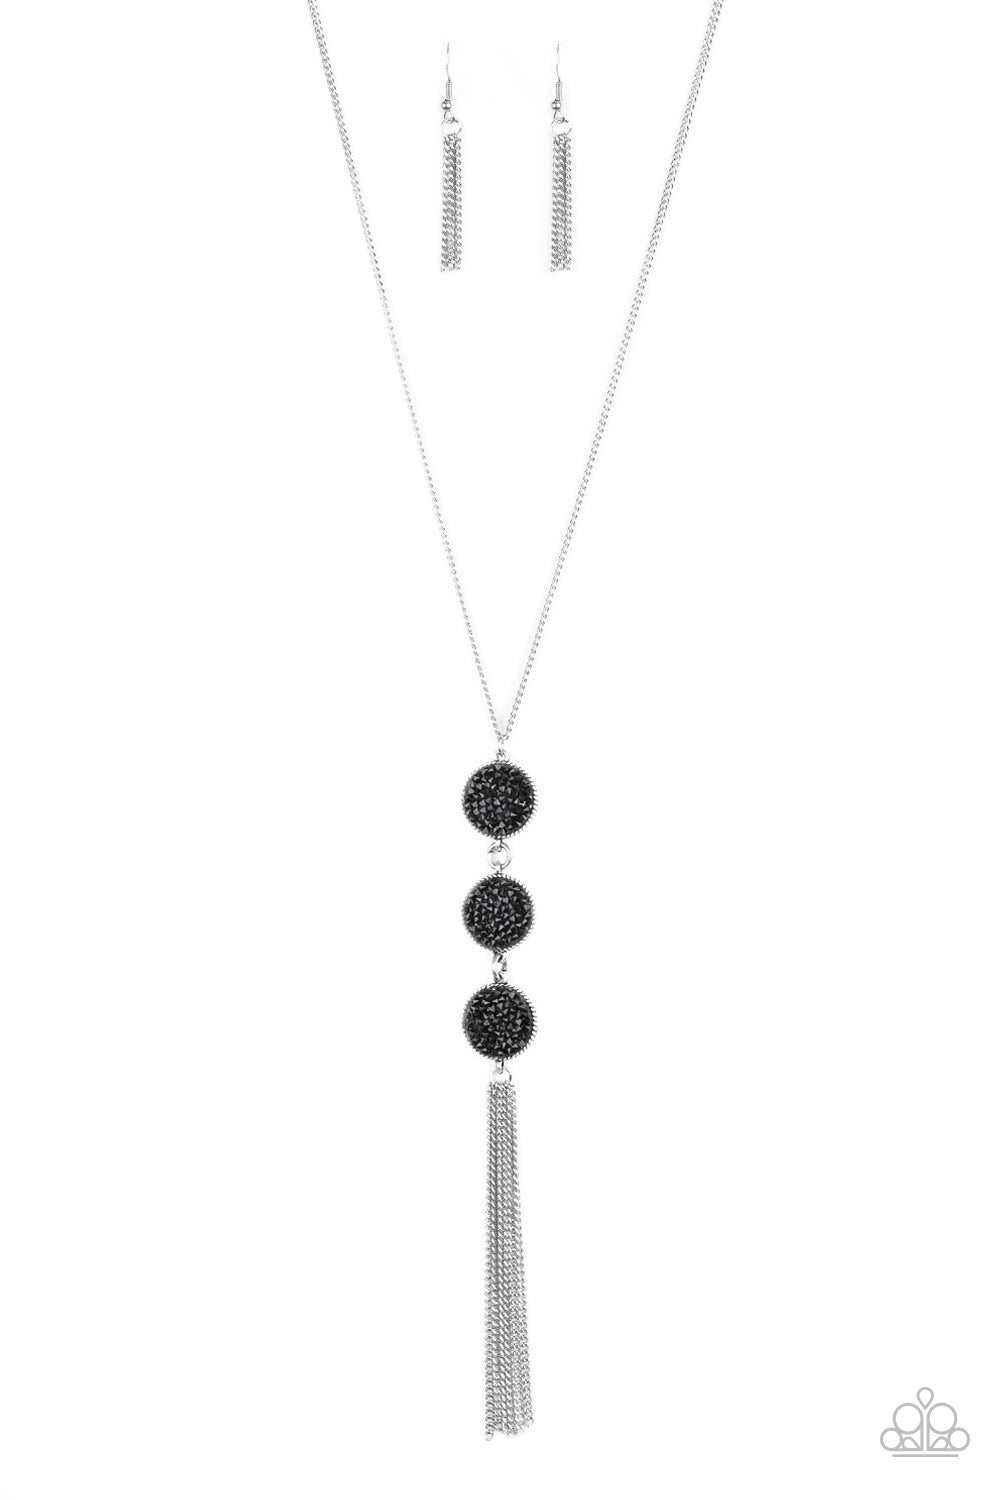 Triple Shimmer - Black Necklace freeshipping - JewLz4u Gemstone Gallery